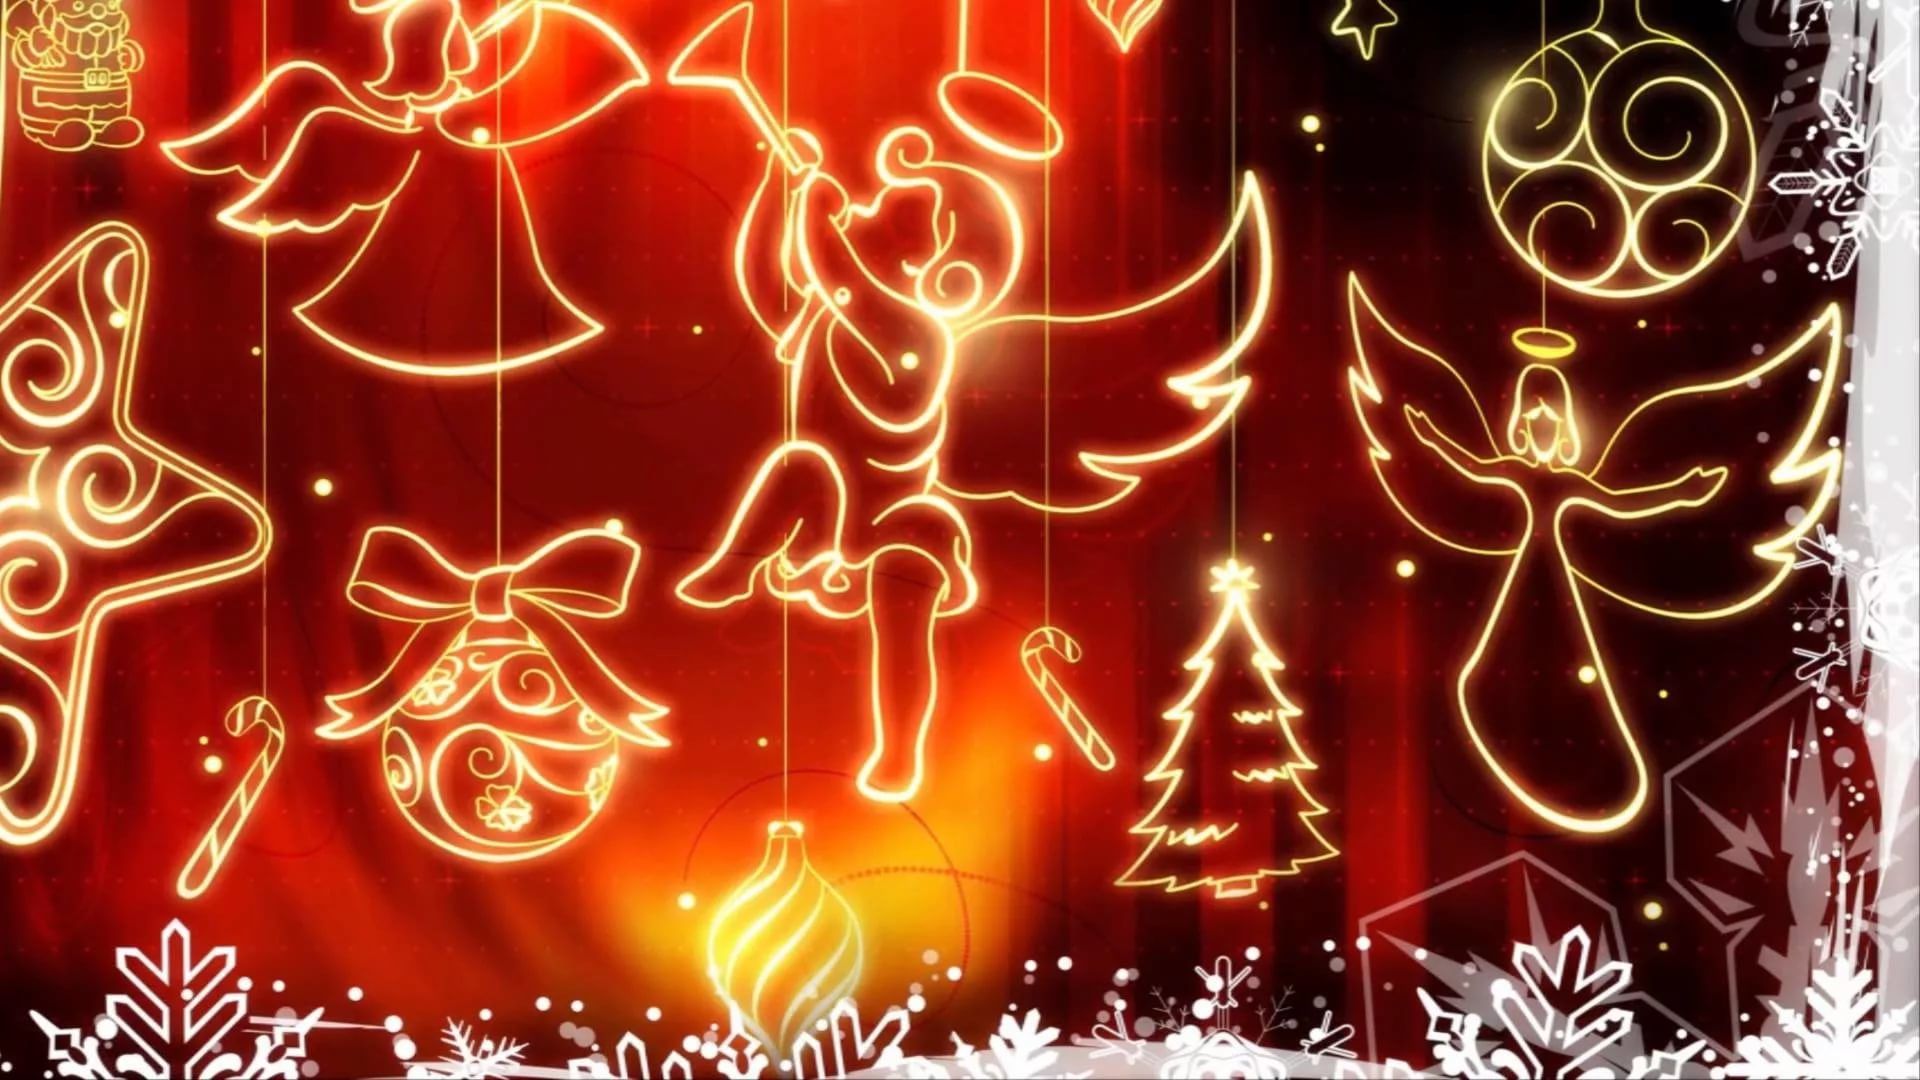 Christian Christmas full screen hd wallpaper